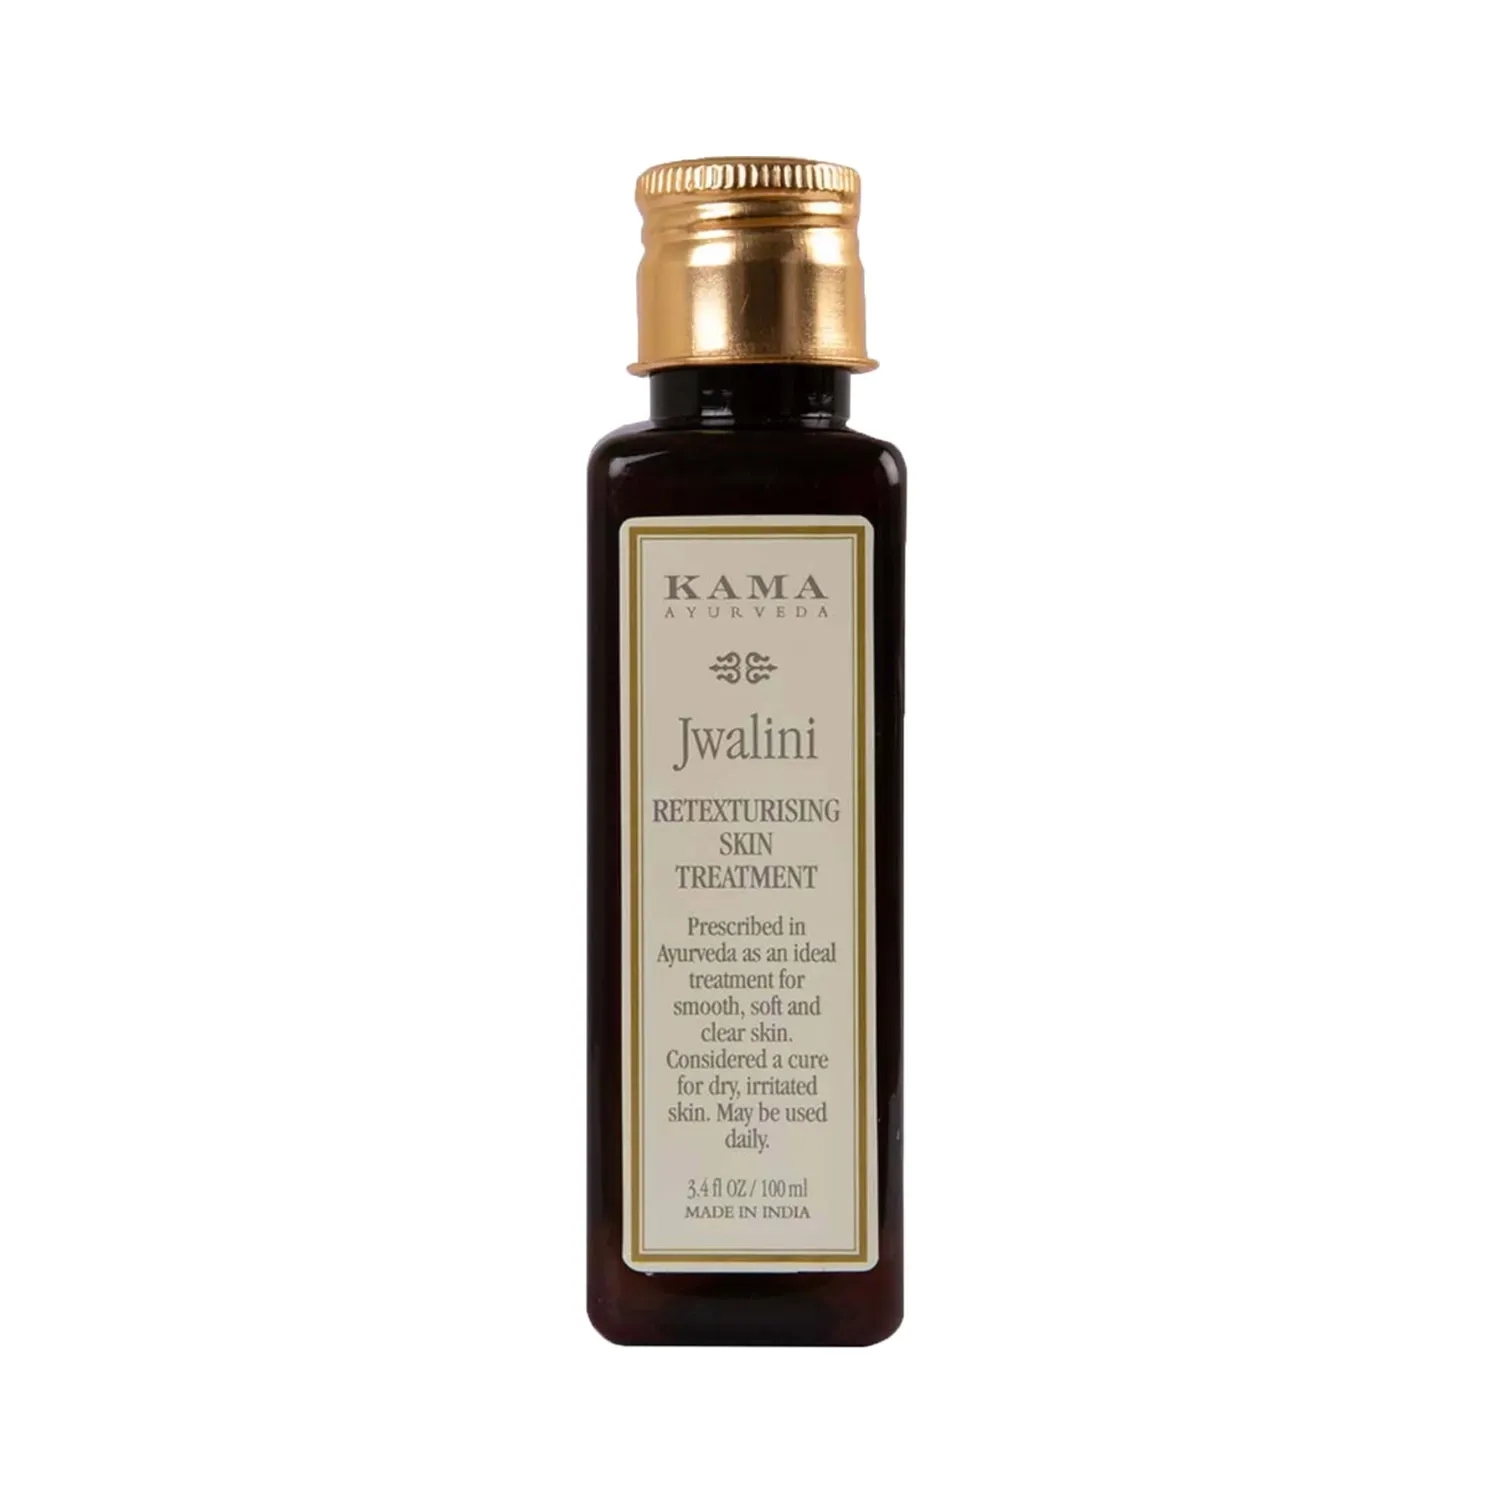 Kama Ayurveda Jwalini Retexturising Skin Treatment Oil (100ml)